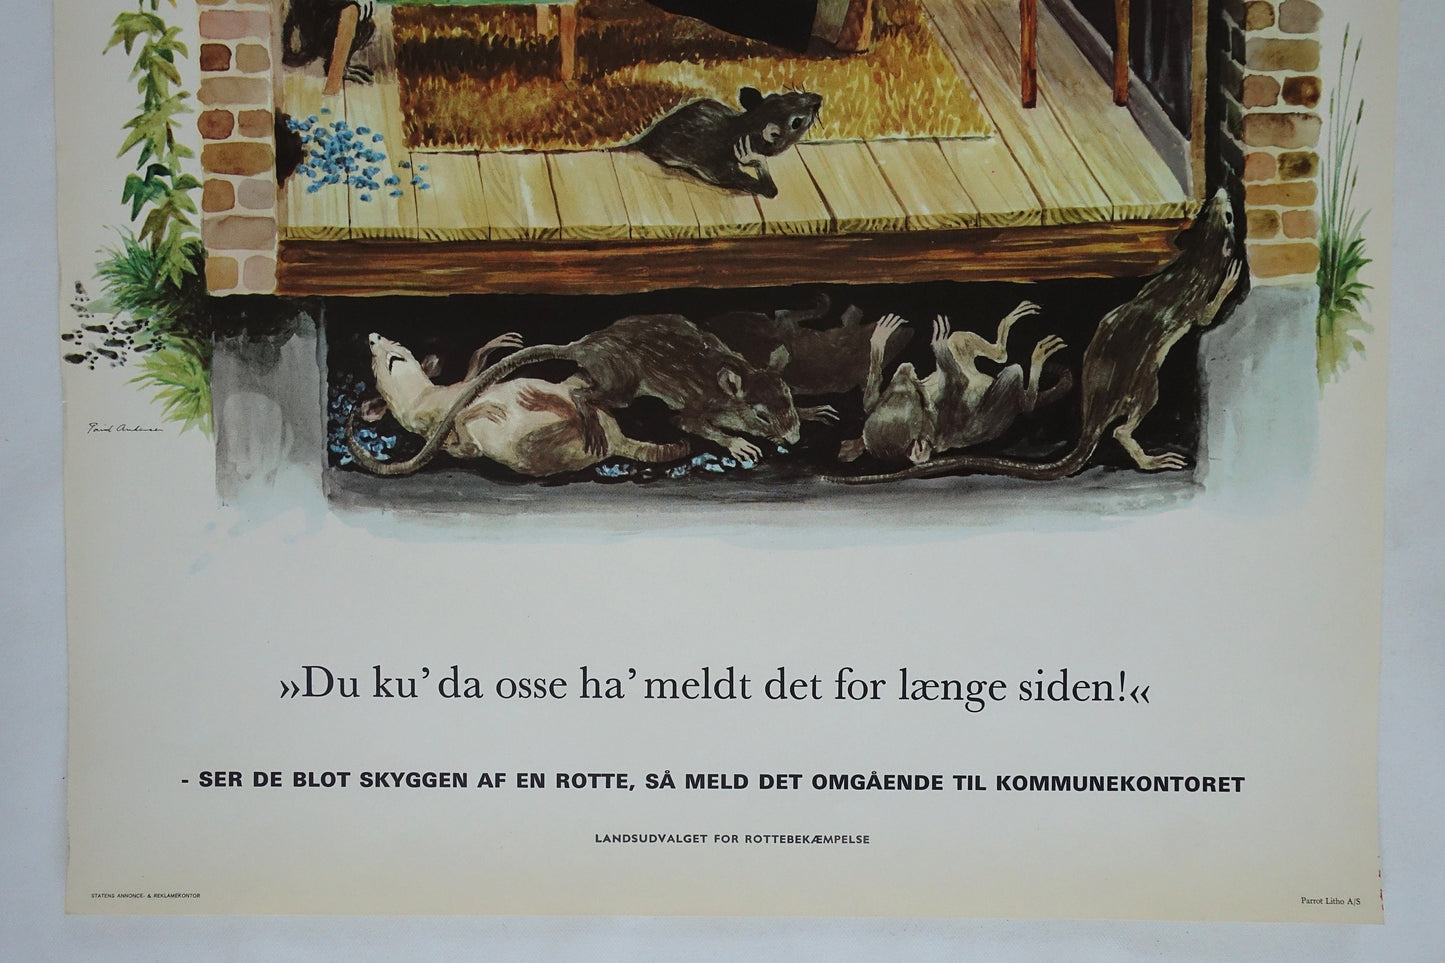 1960s Anti-rat Campaign Poster - Original Vintage Poster